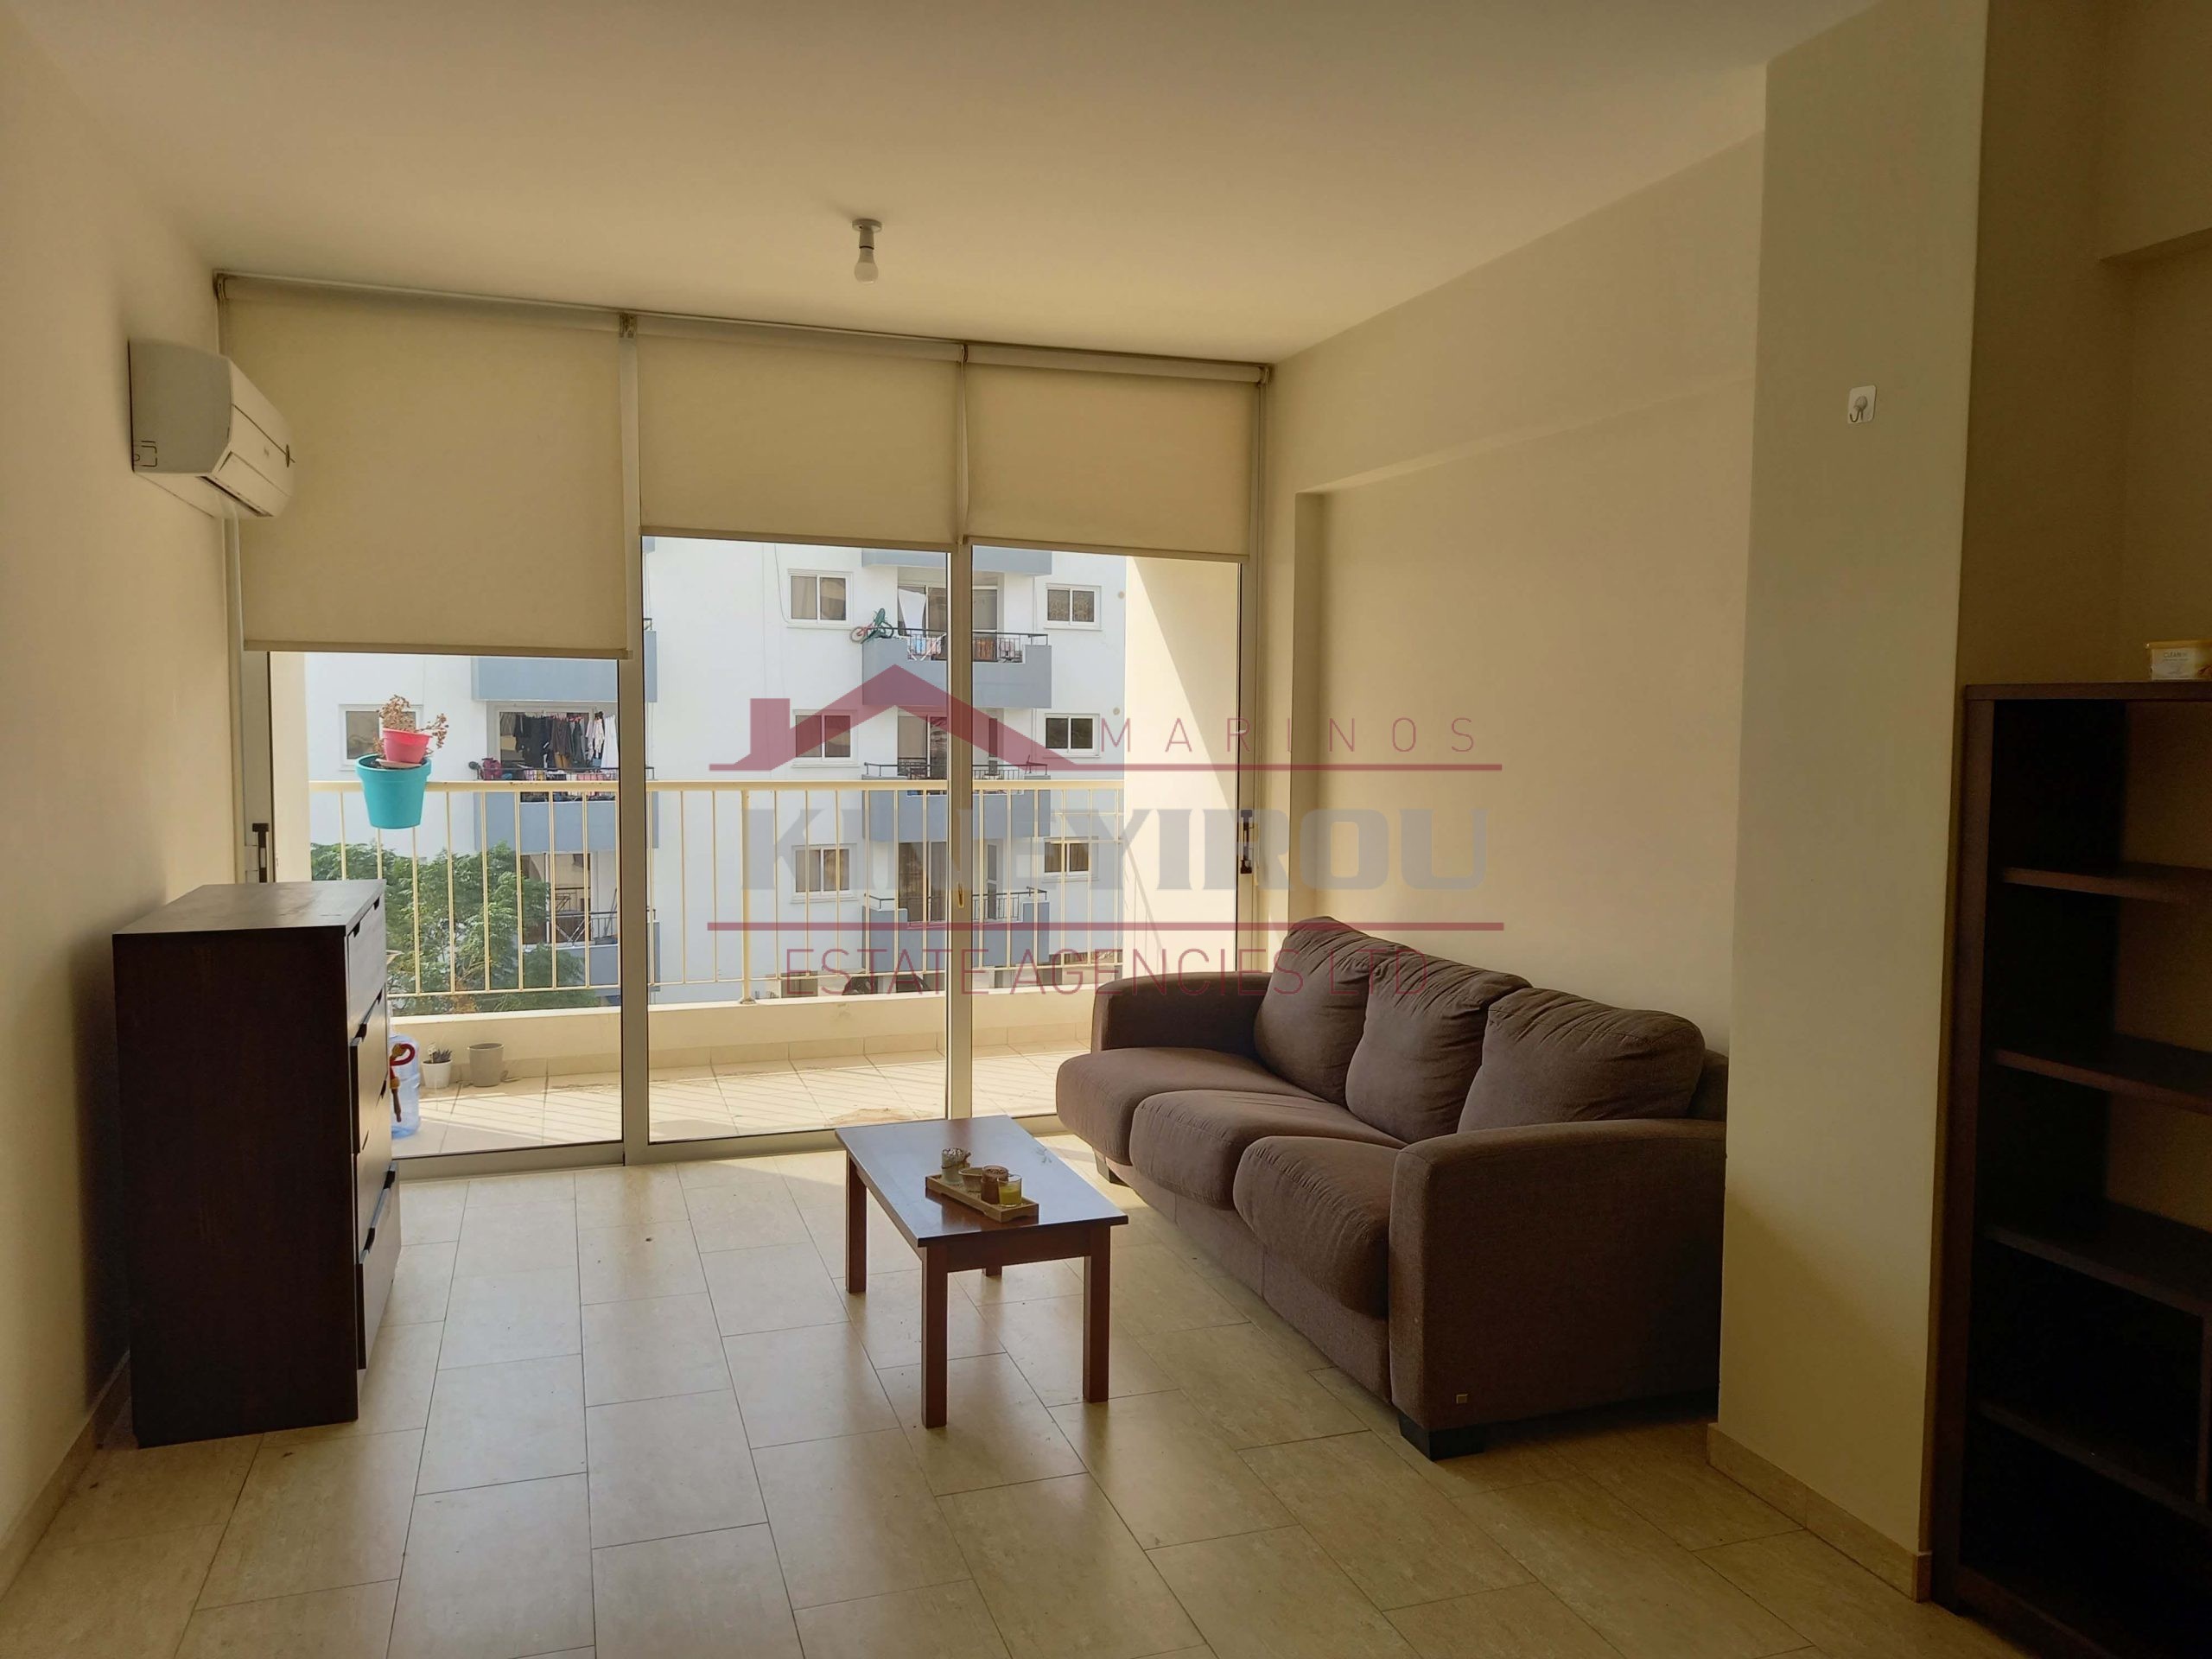 1 Bedroom Apartment In Drosia Area,Larnaca